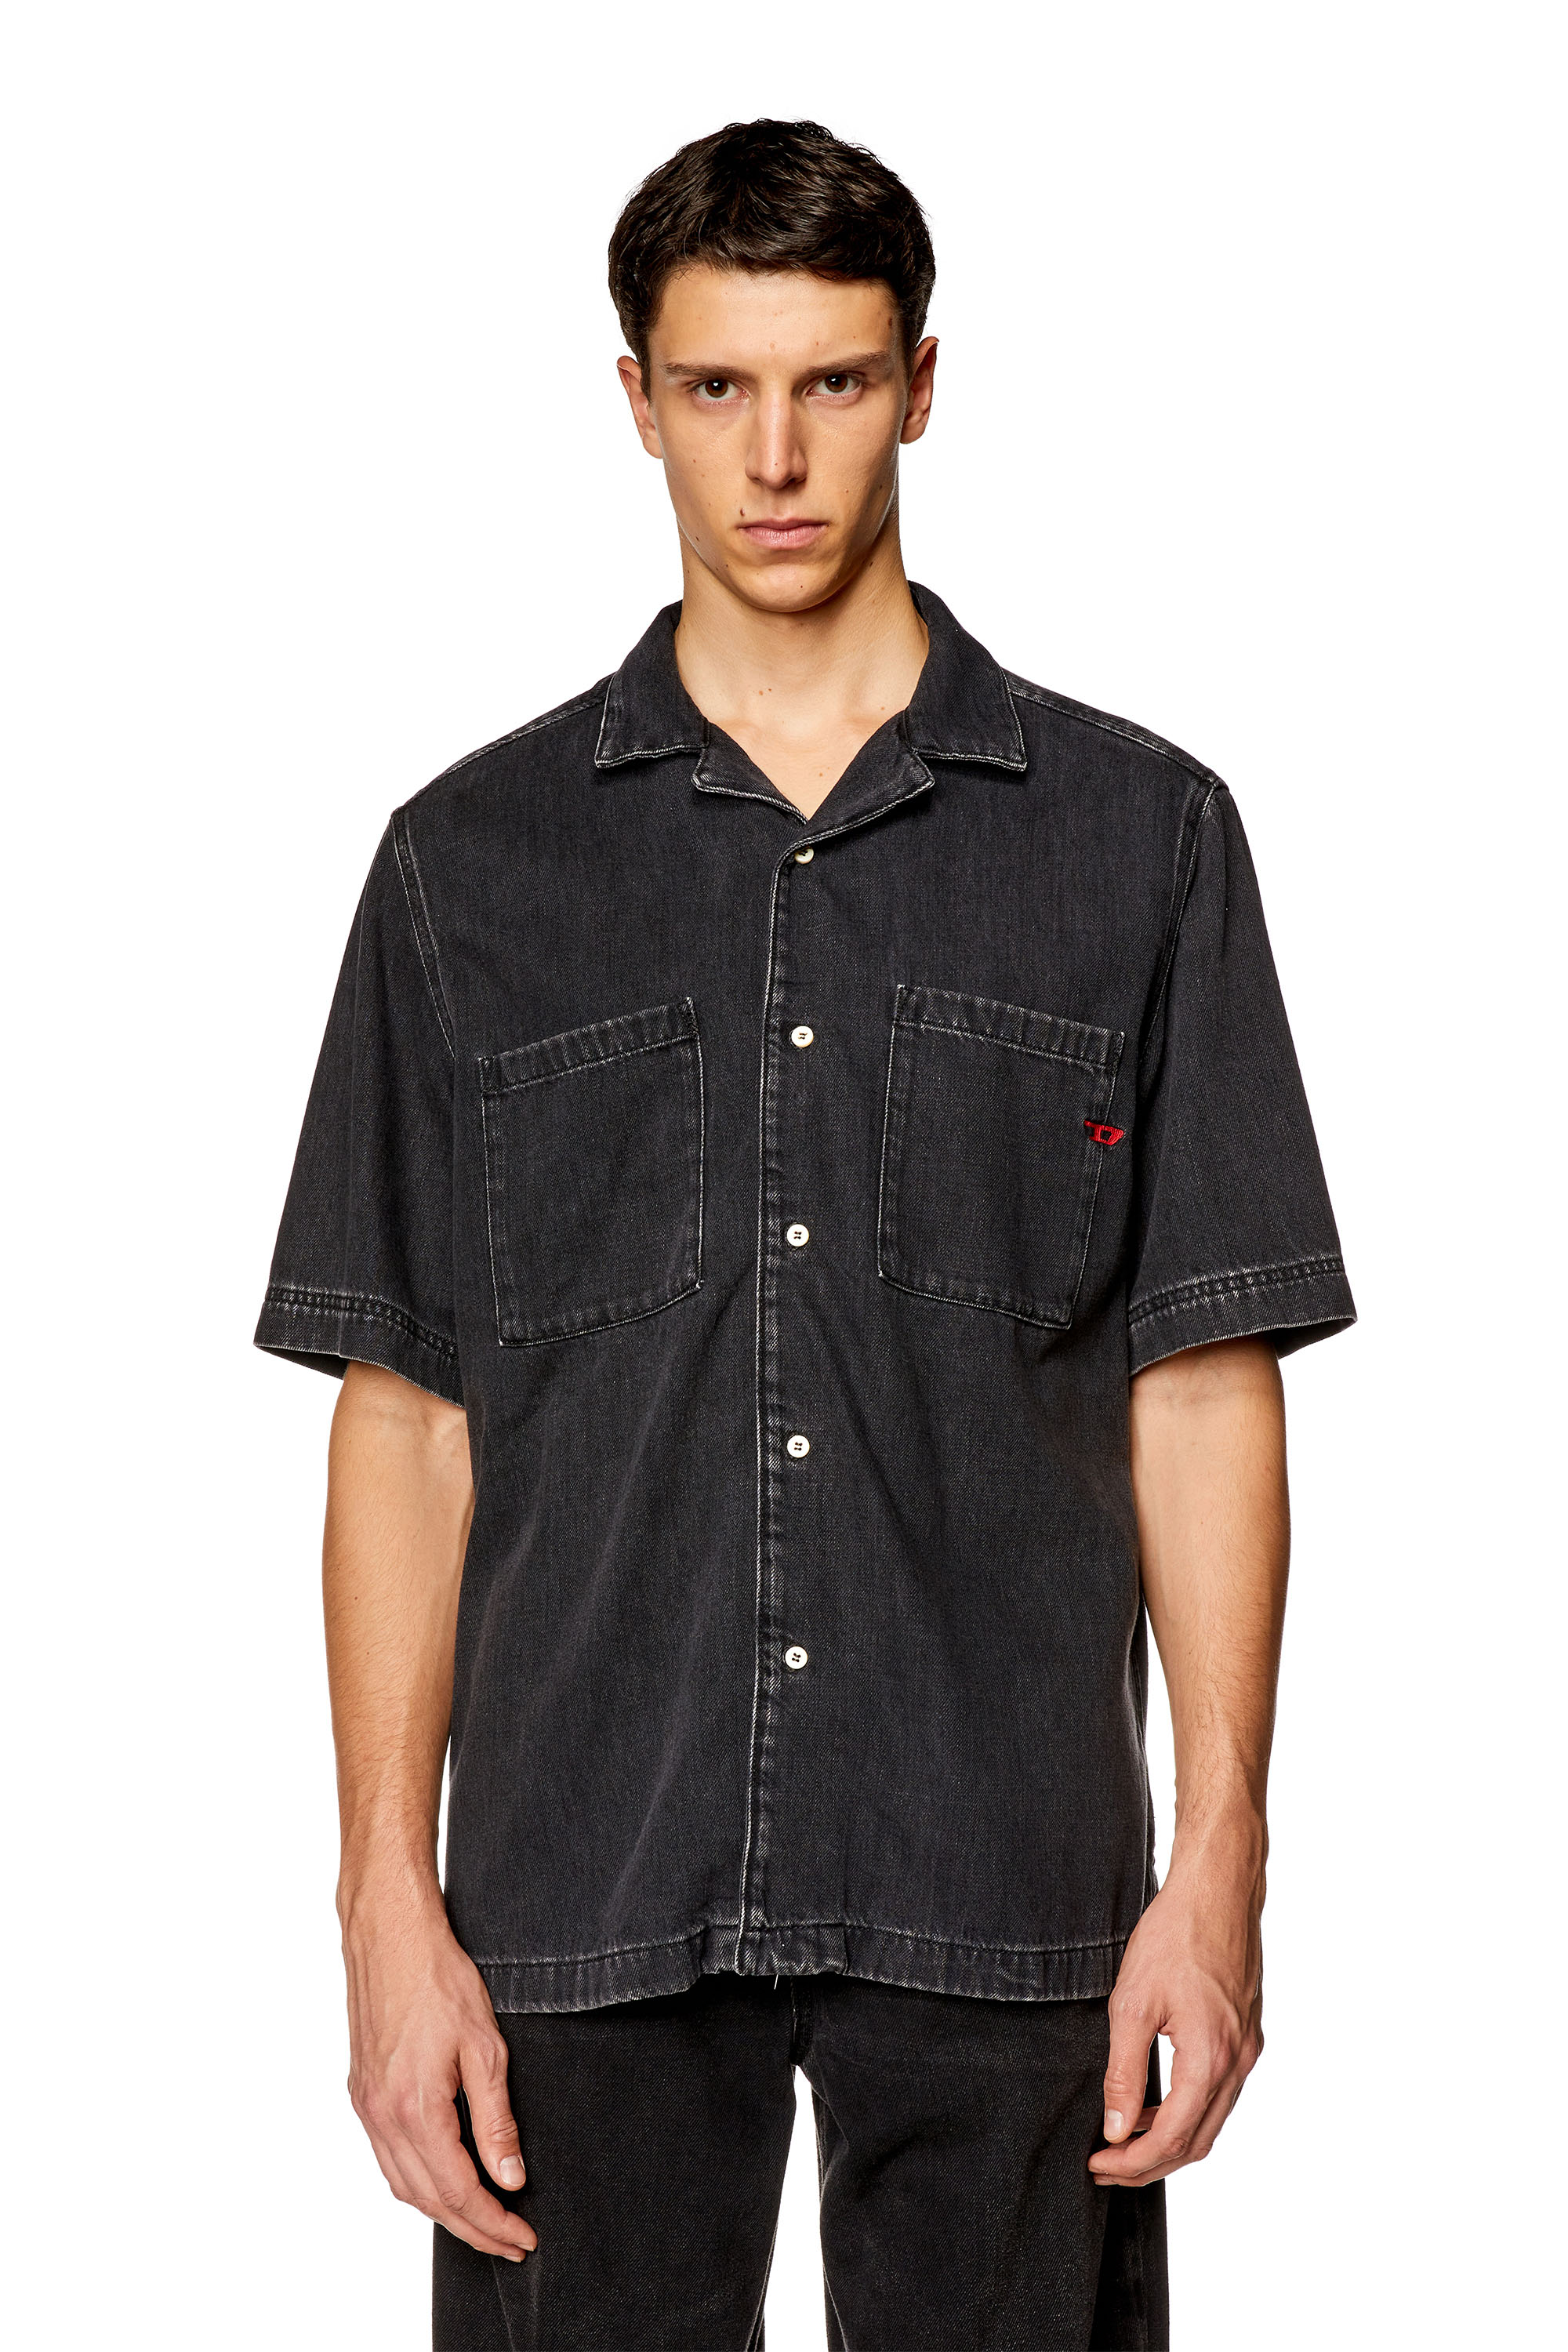 Diesel - D-PAROSHORT, Man Bowling shirt in Tencel denim in Black - Image 3